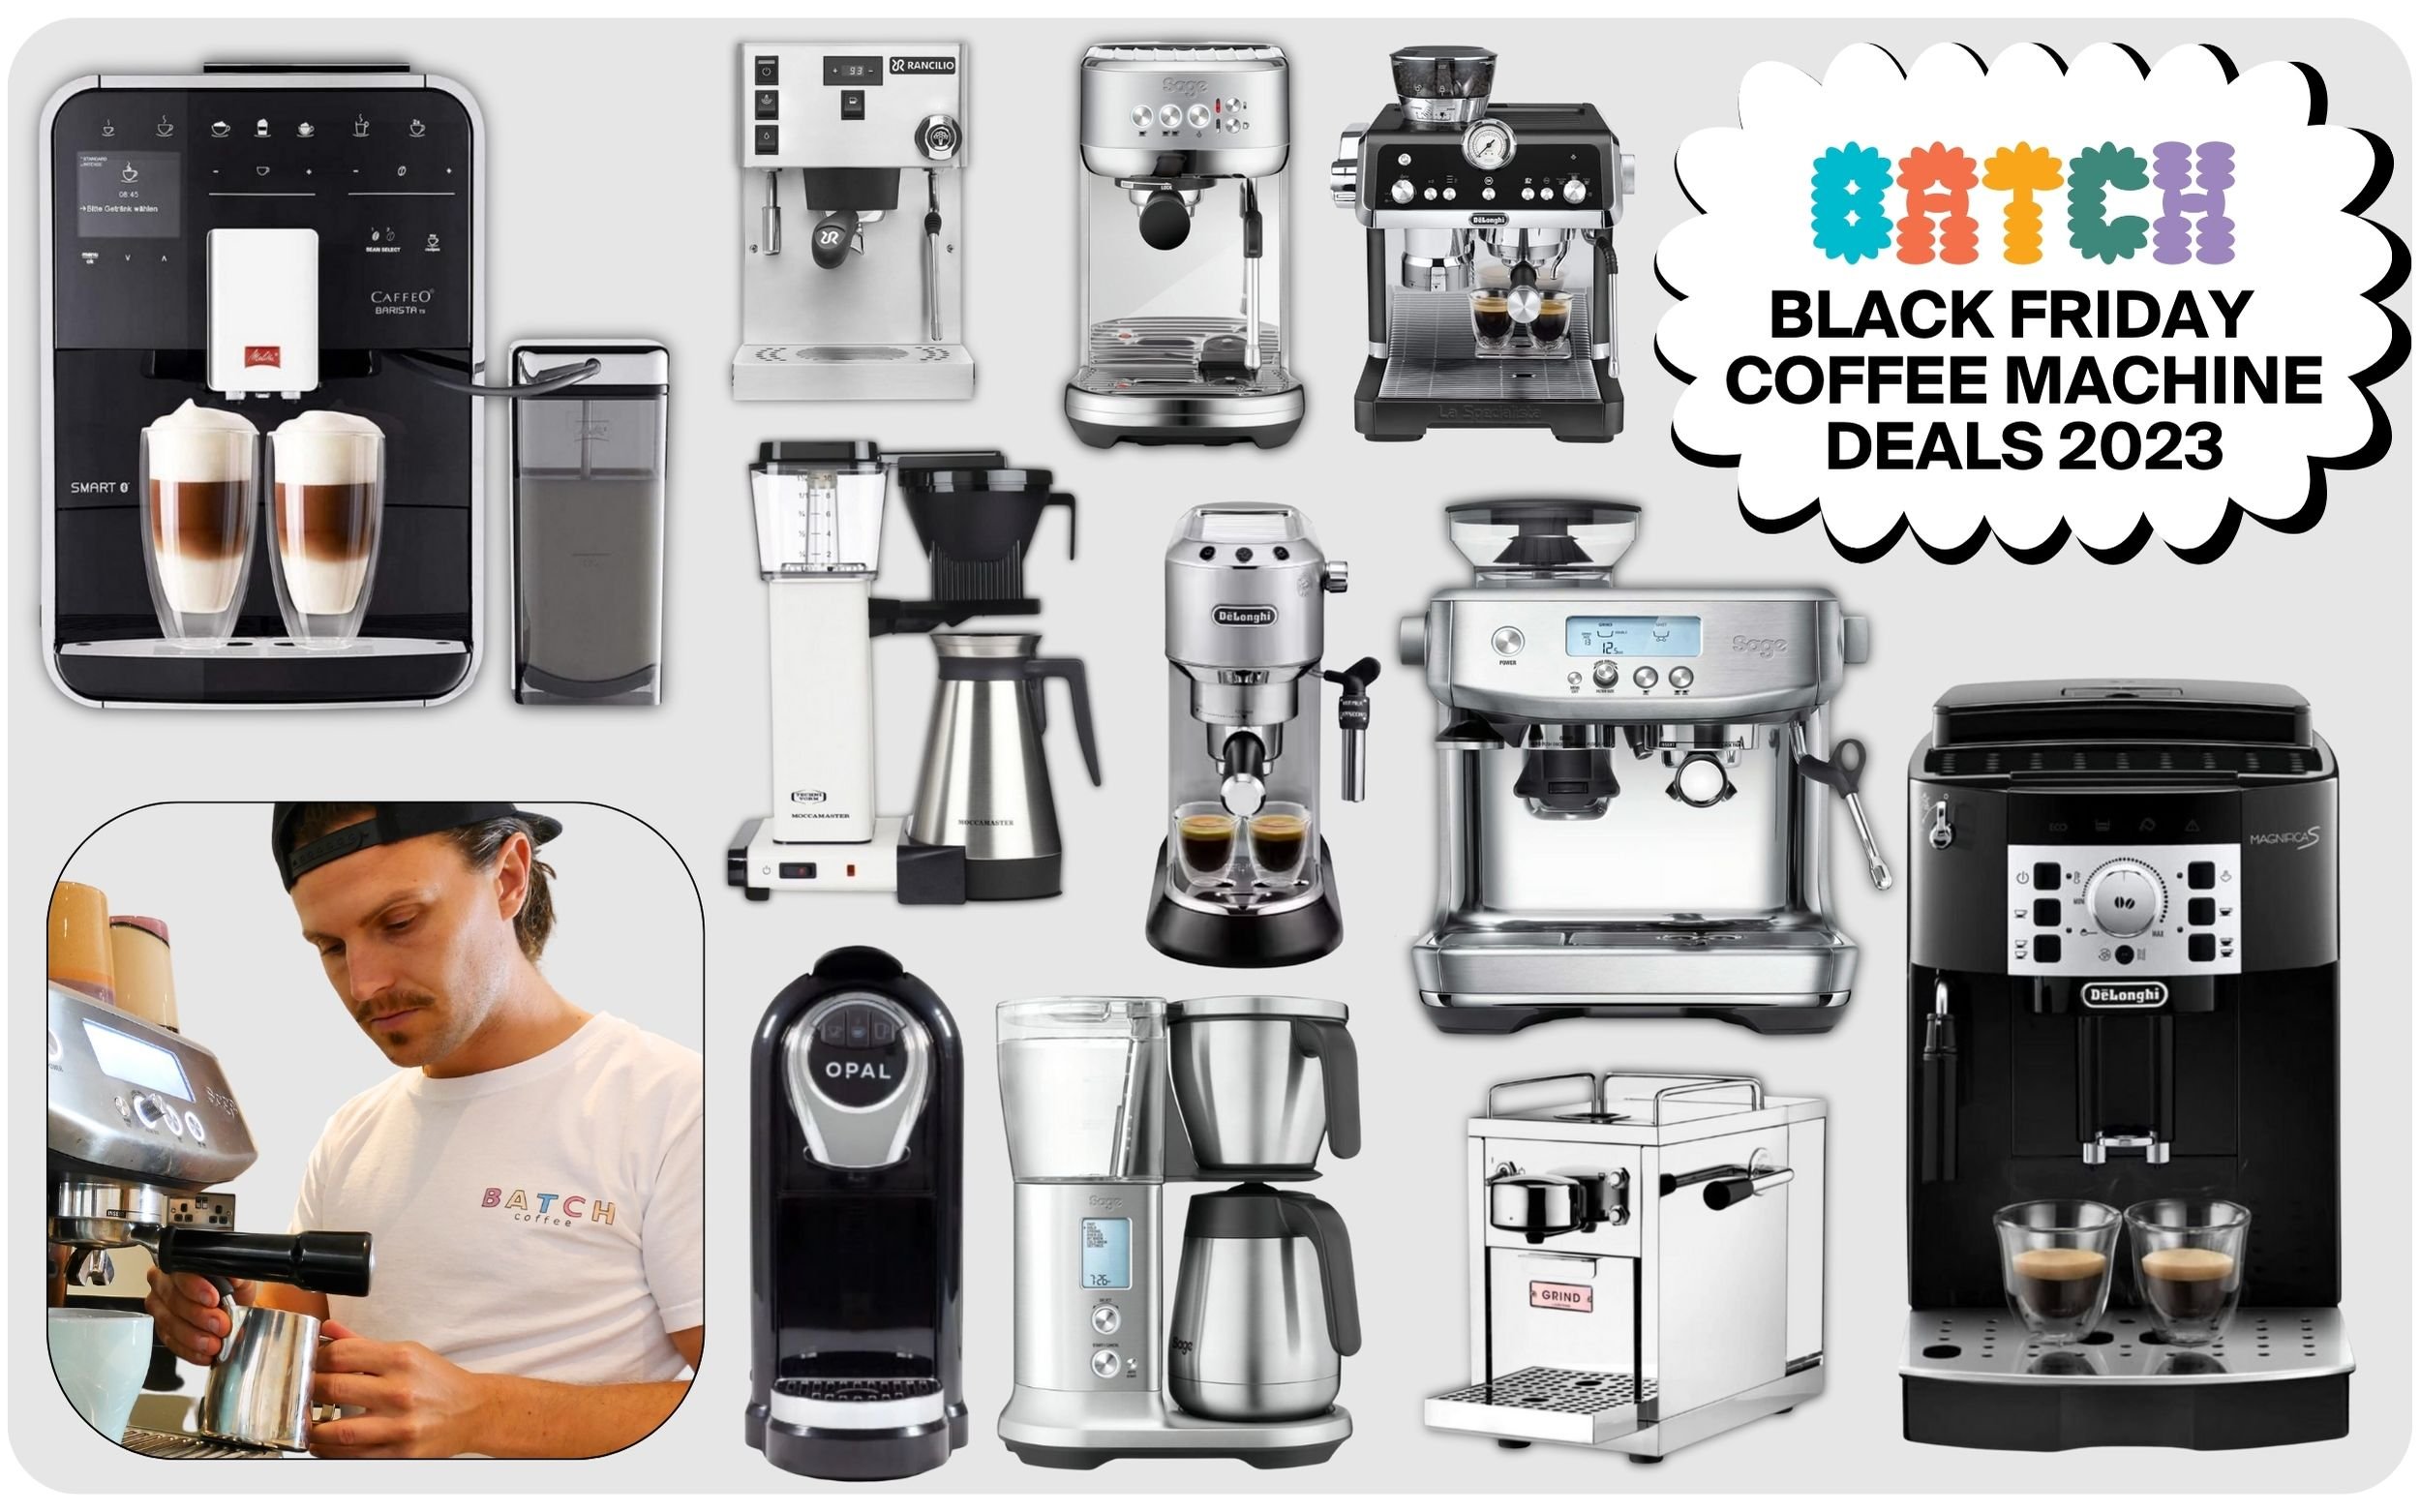 Black Friday Coffee Machine Deals 2023 (Sage, Delonghi etc)